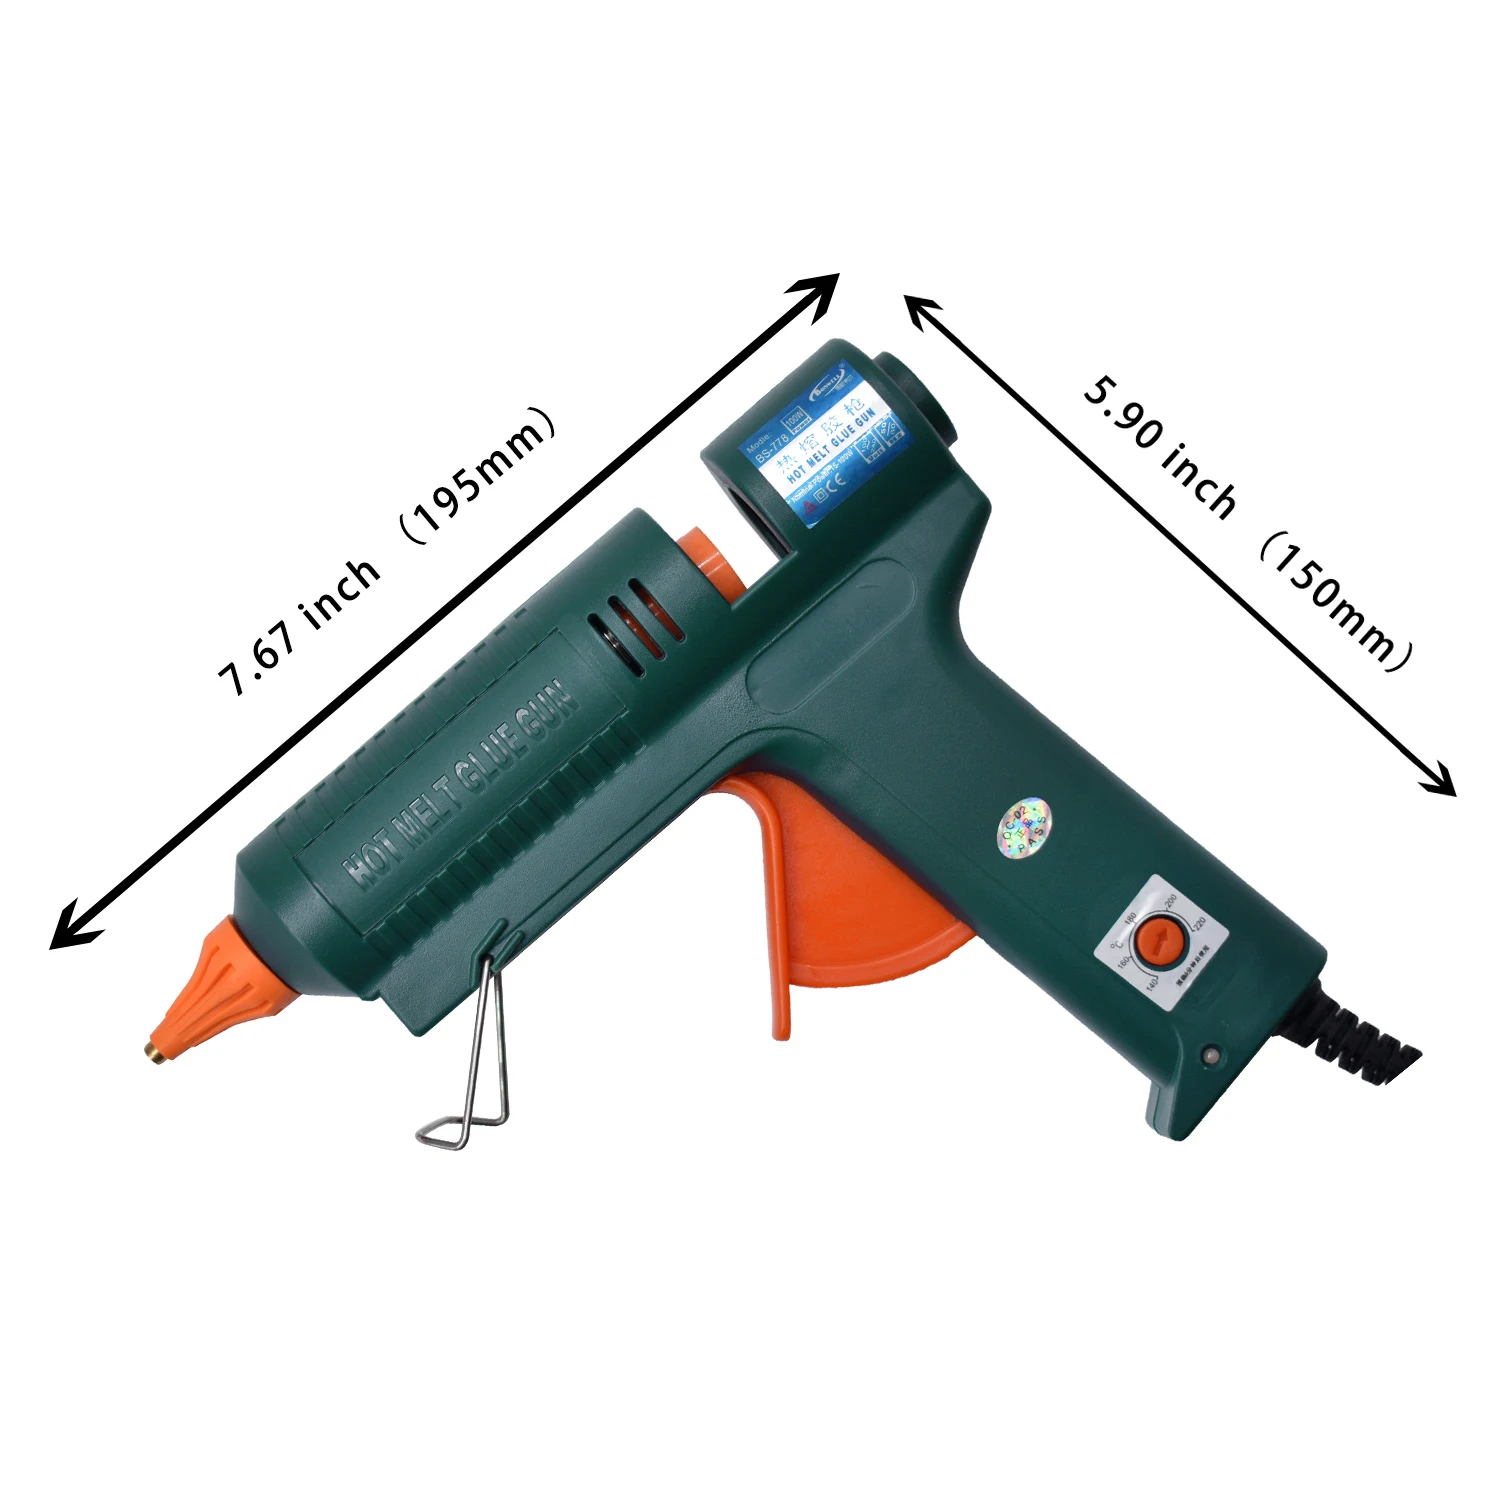 150W Glue Gun Hot Melt Electric Trigger DIY Adhesive Crafts FREE GLUE STICKS UK 